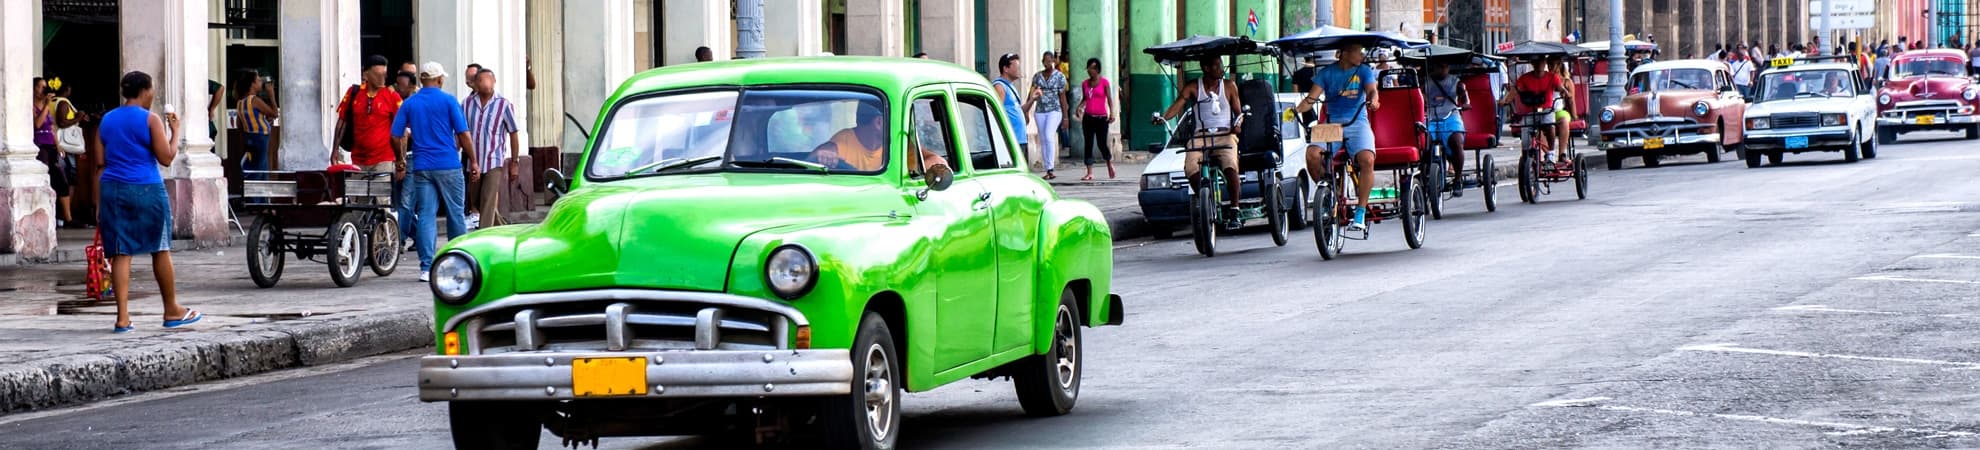 Visiter Cuba